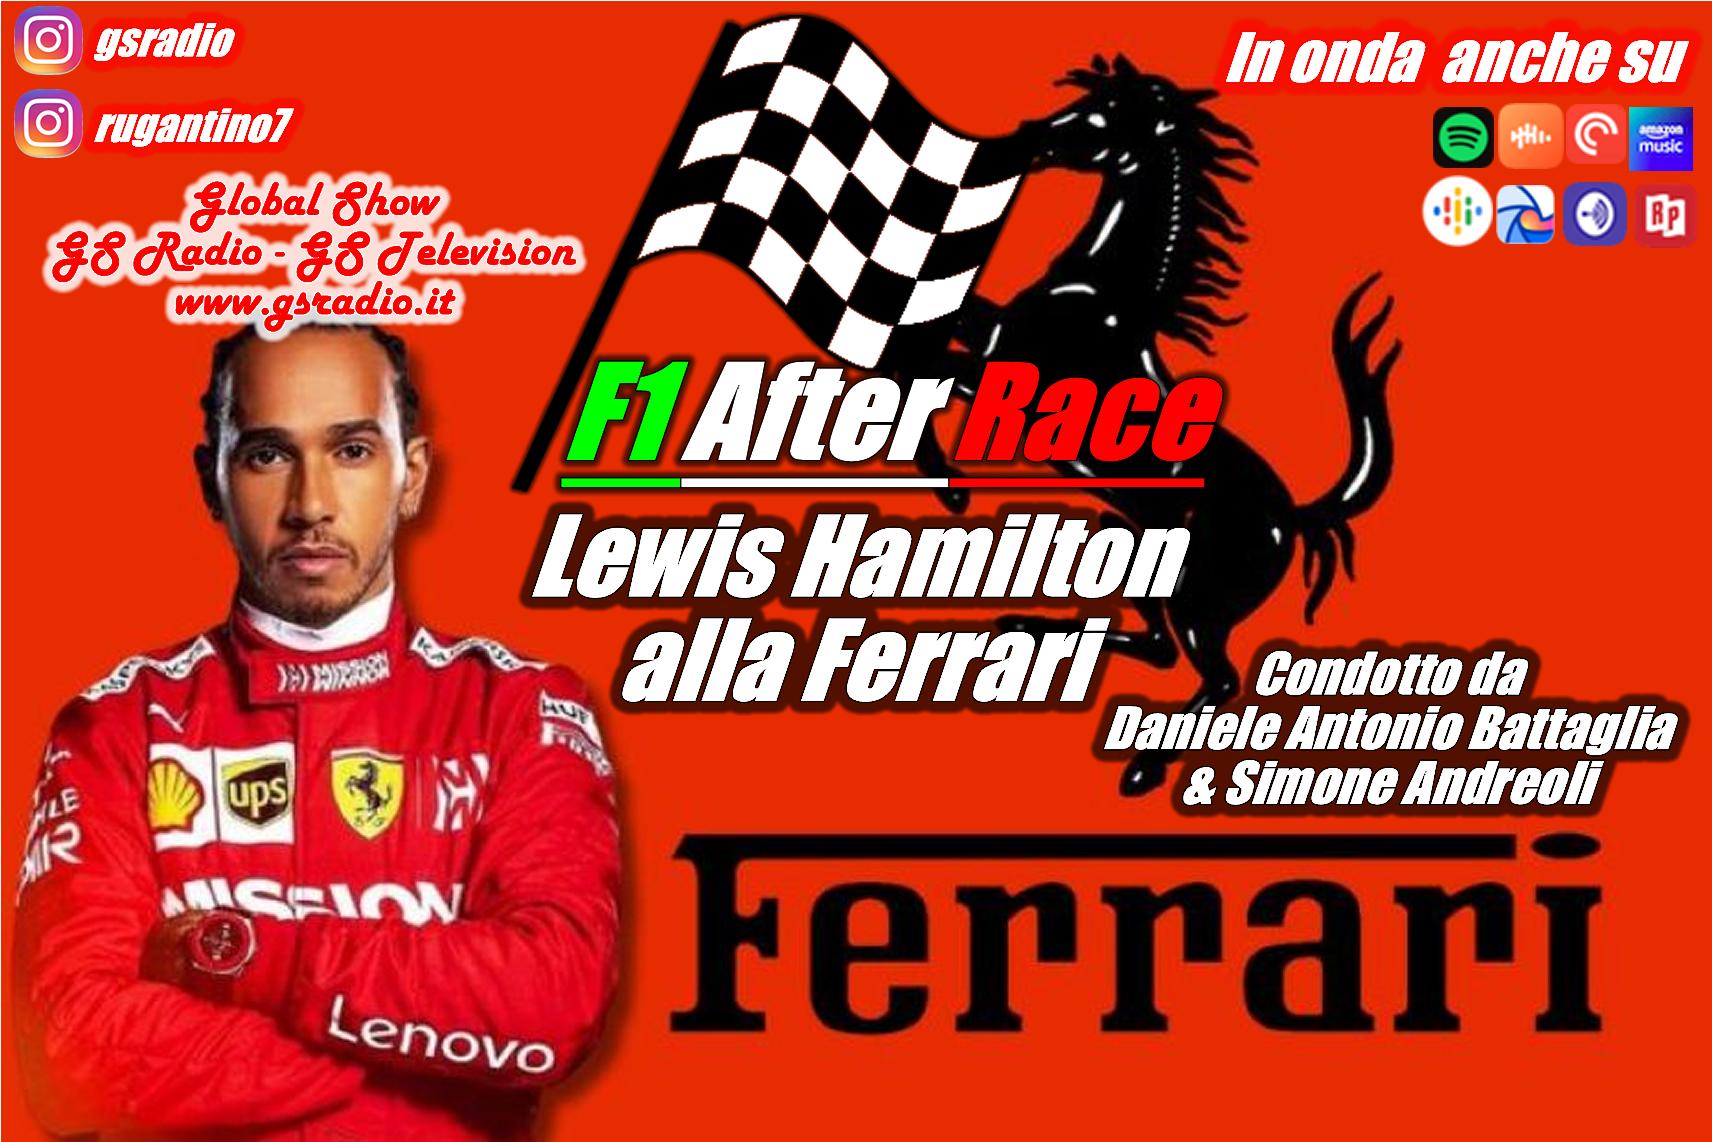 1 - Lewis Hamilton alla Ferrari